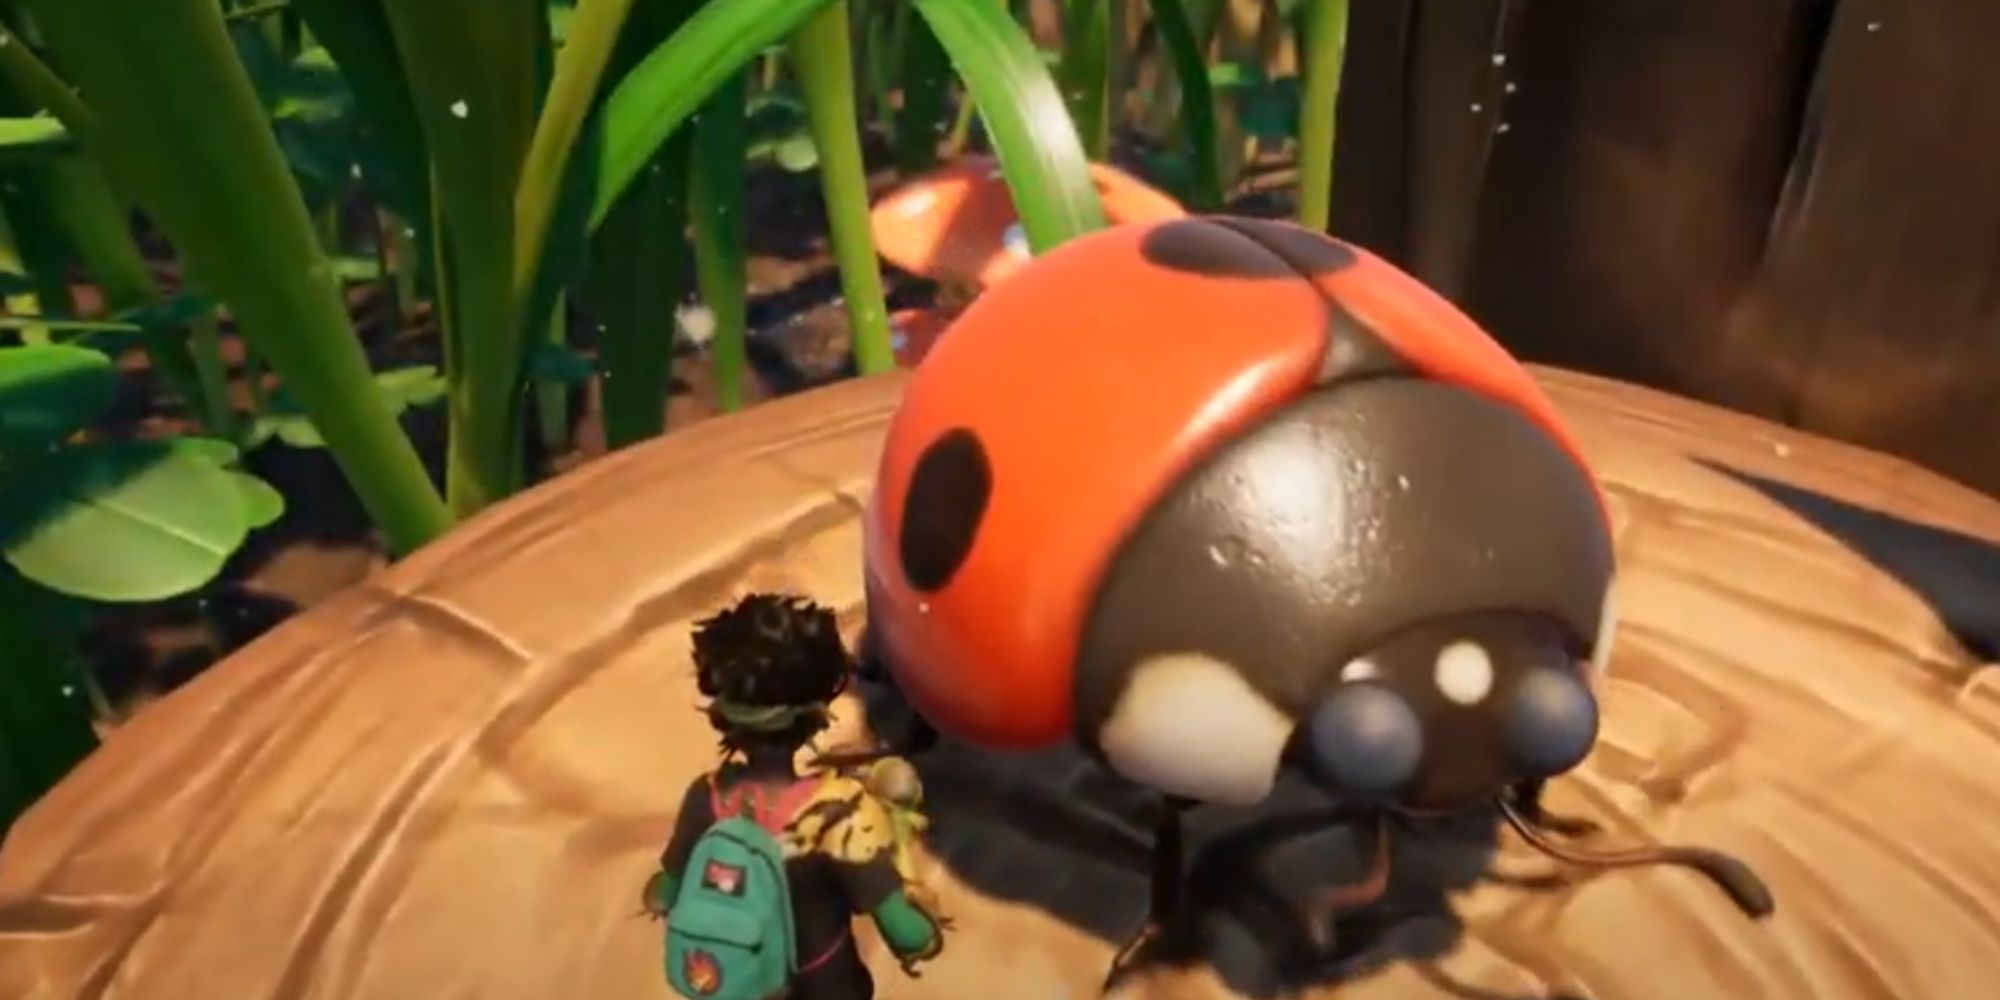 Grounded ladybug next to character